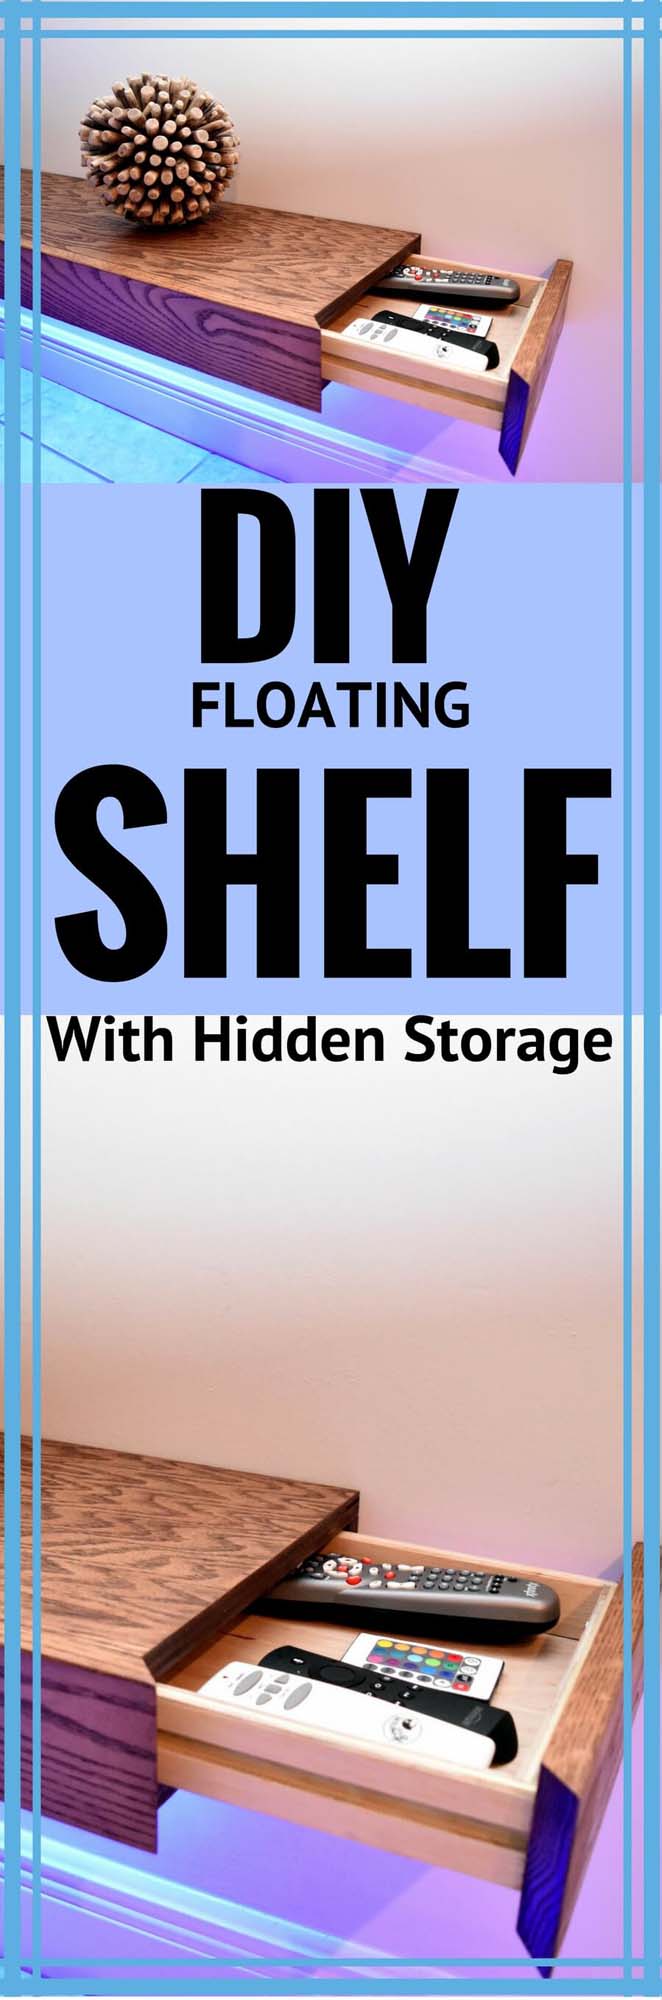 Hide the Remote! Secret Storage Shelves #floatingshelf #organization #decorhomeideas